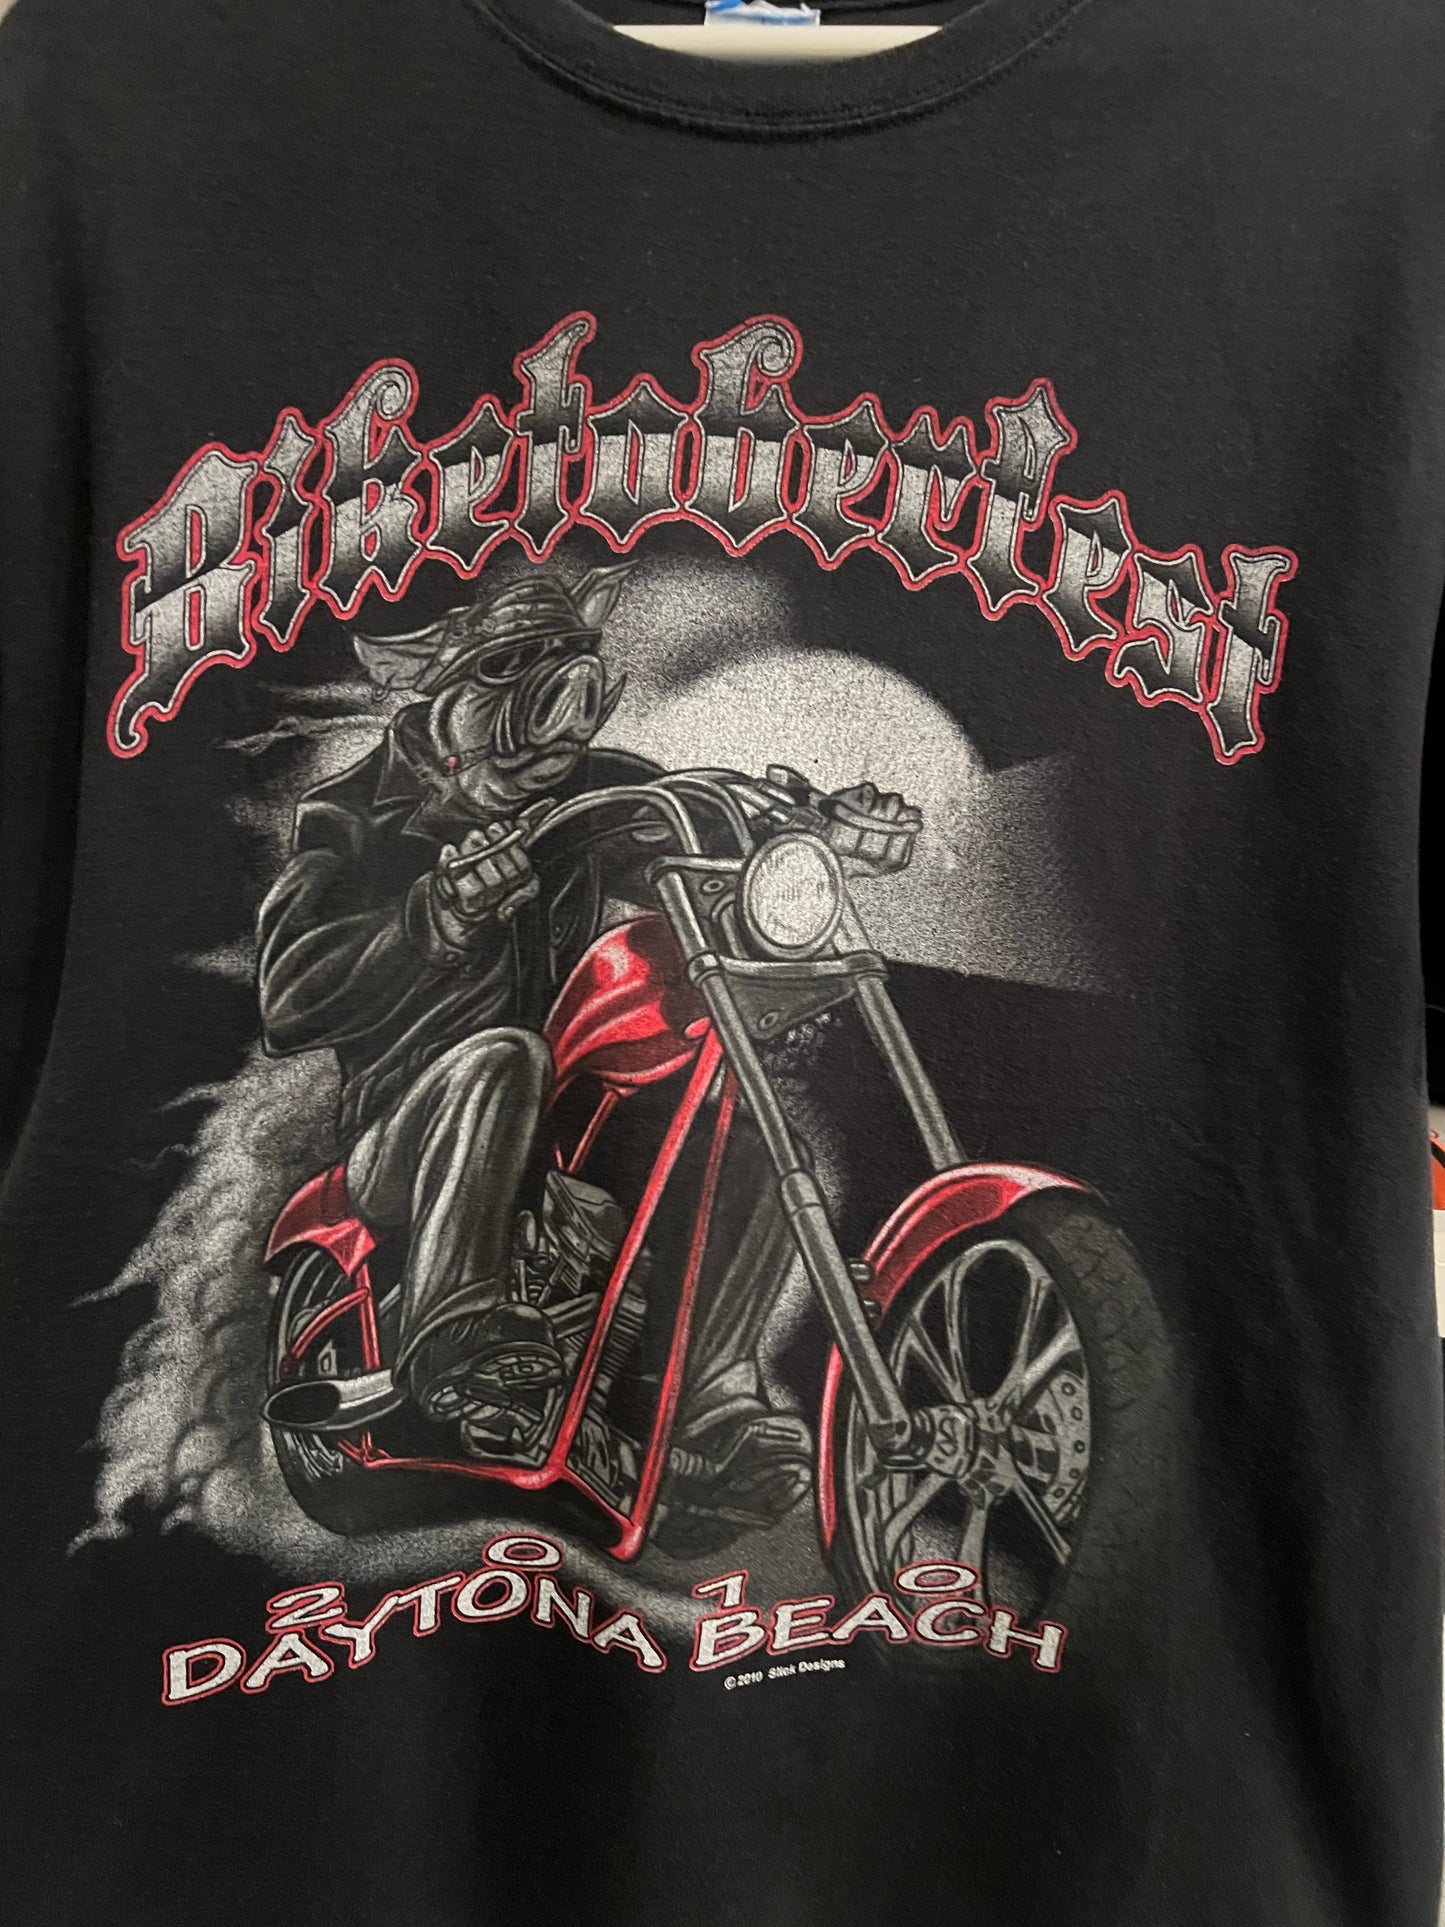 Daytona Beach Biketober Fest T-shirt size M